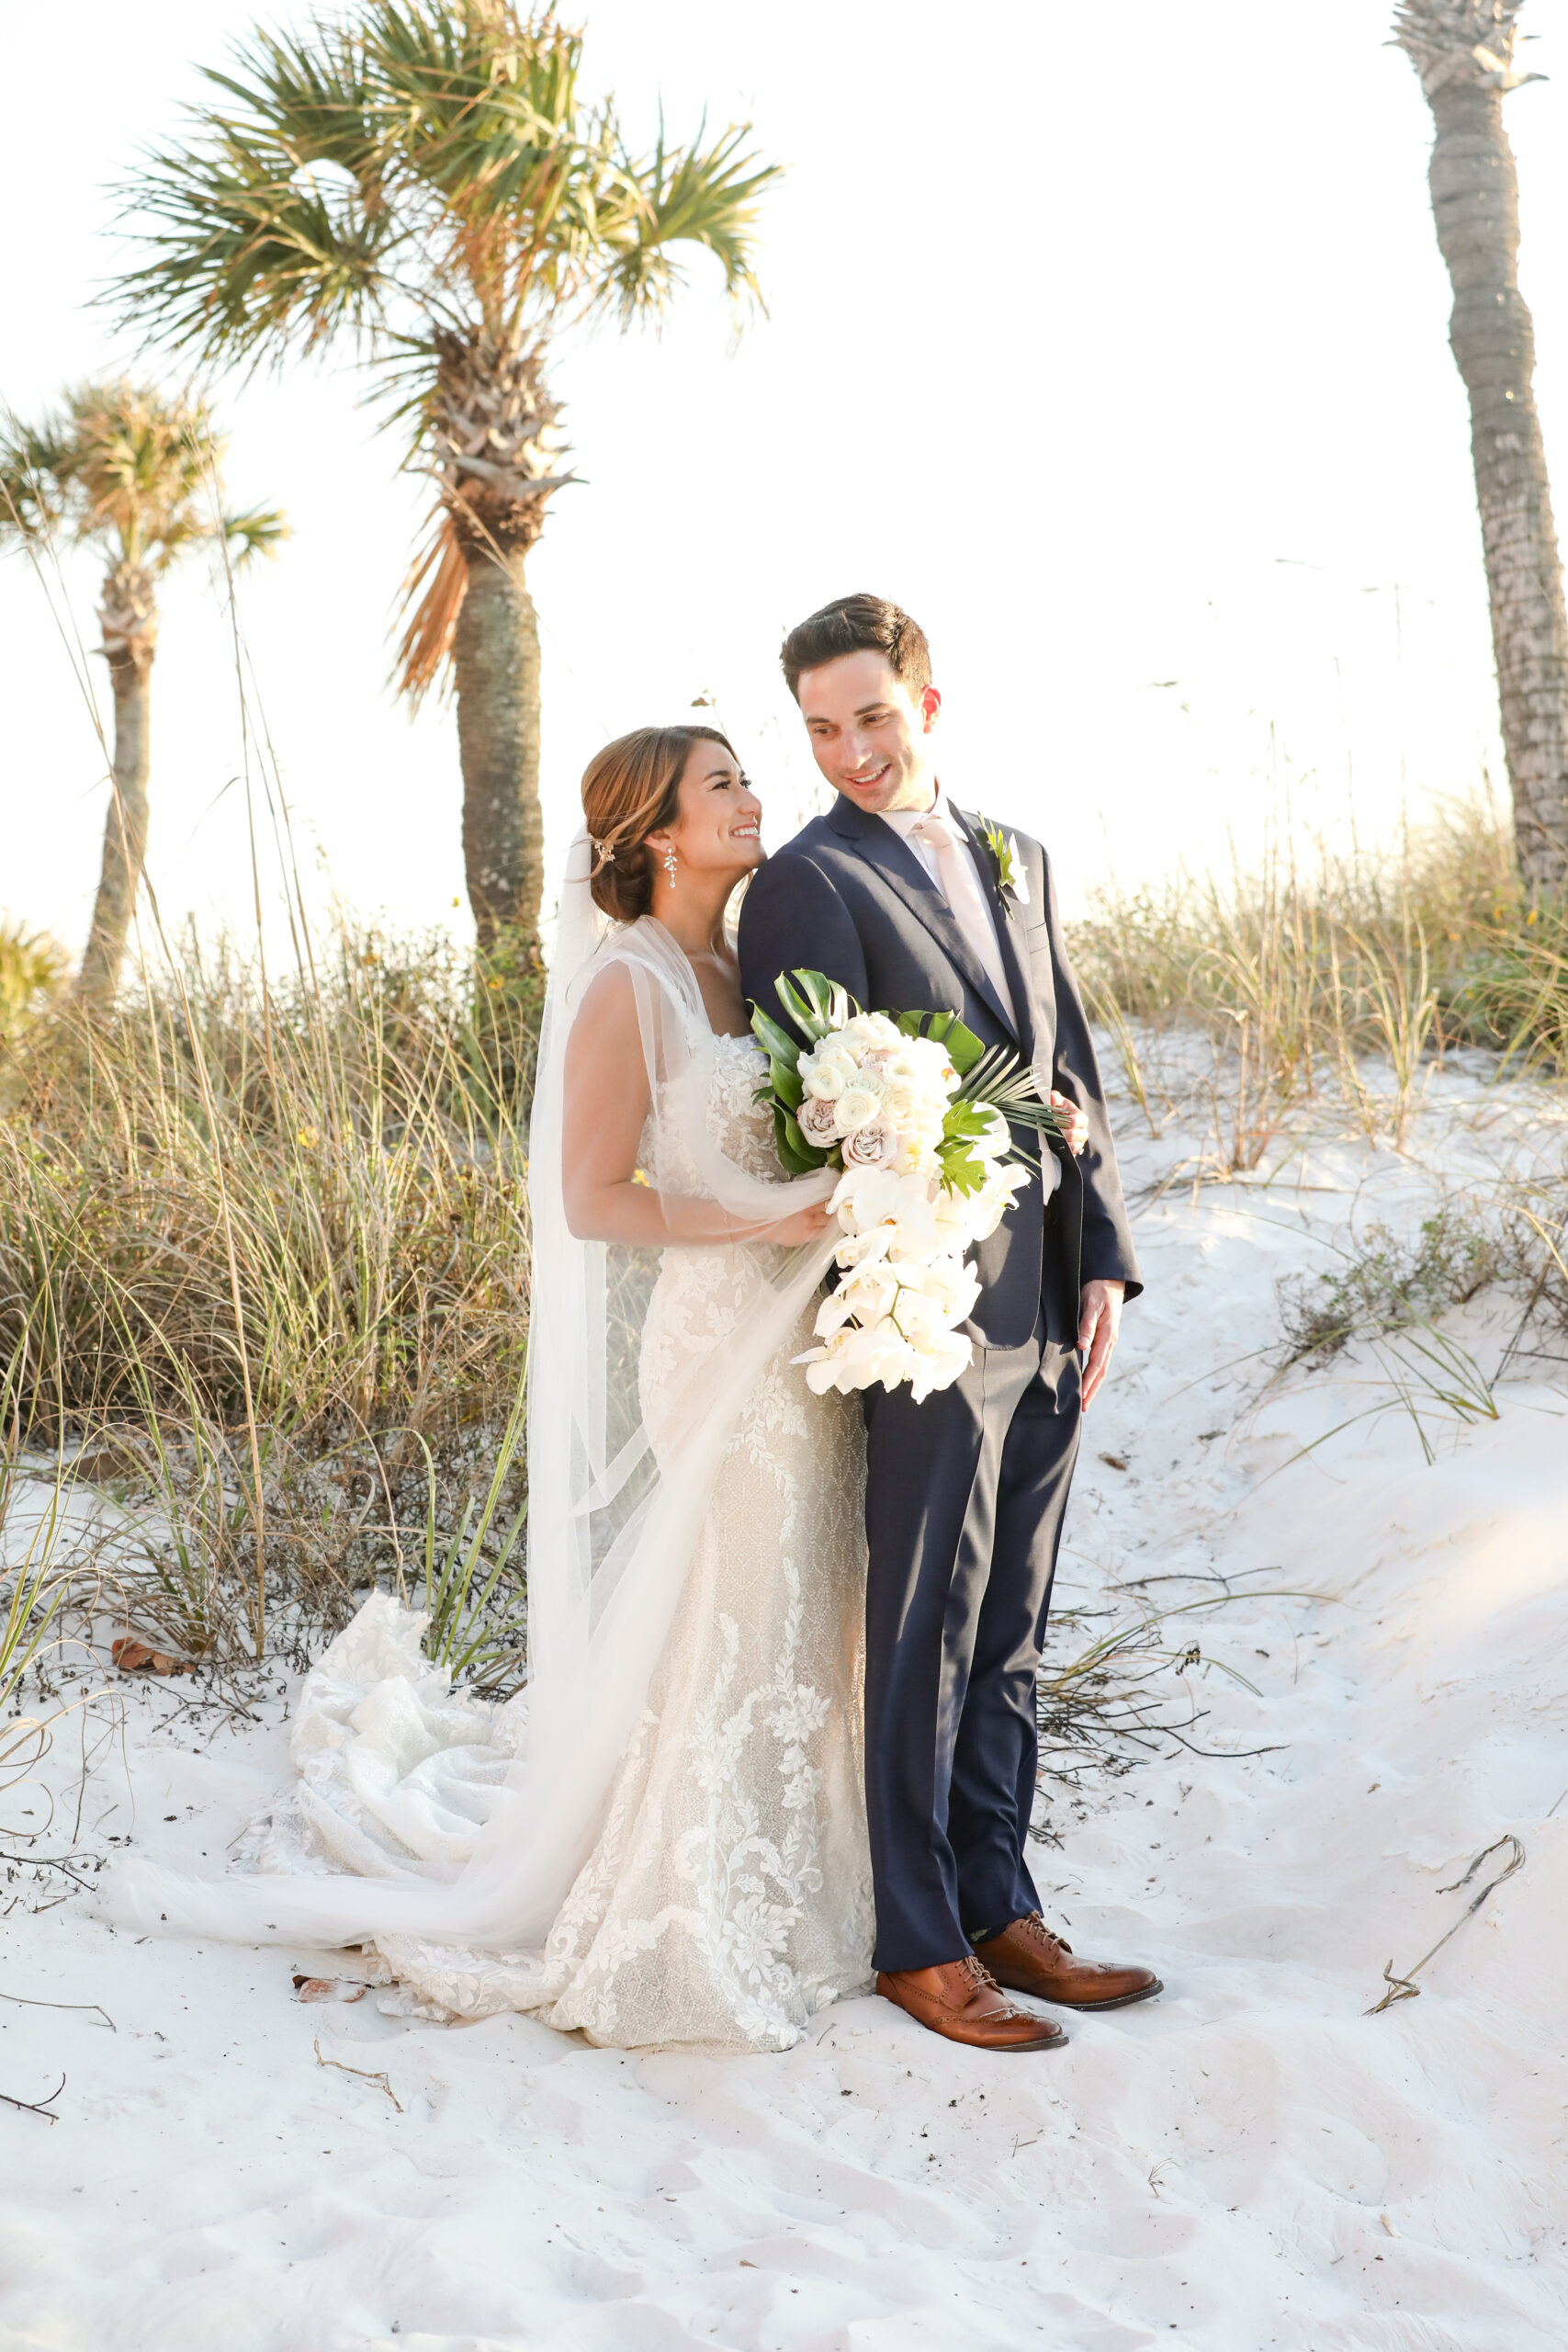 Tropical Bride and Groom Beach Wedding Portrait | St Pete Photographer Lifelong Photography